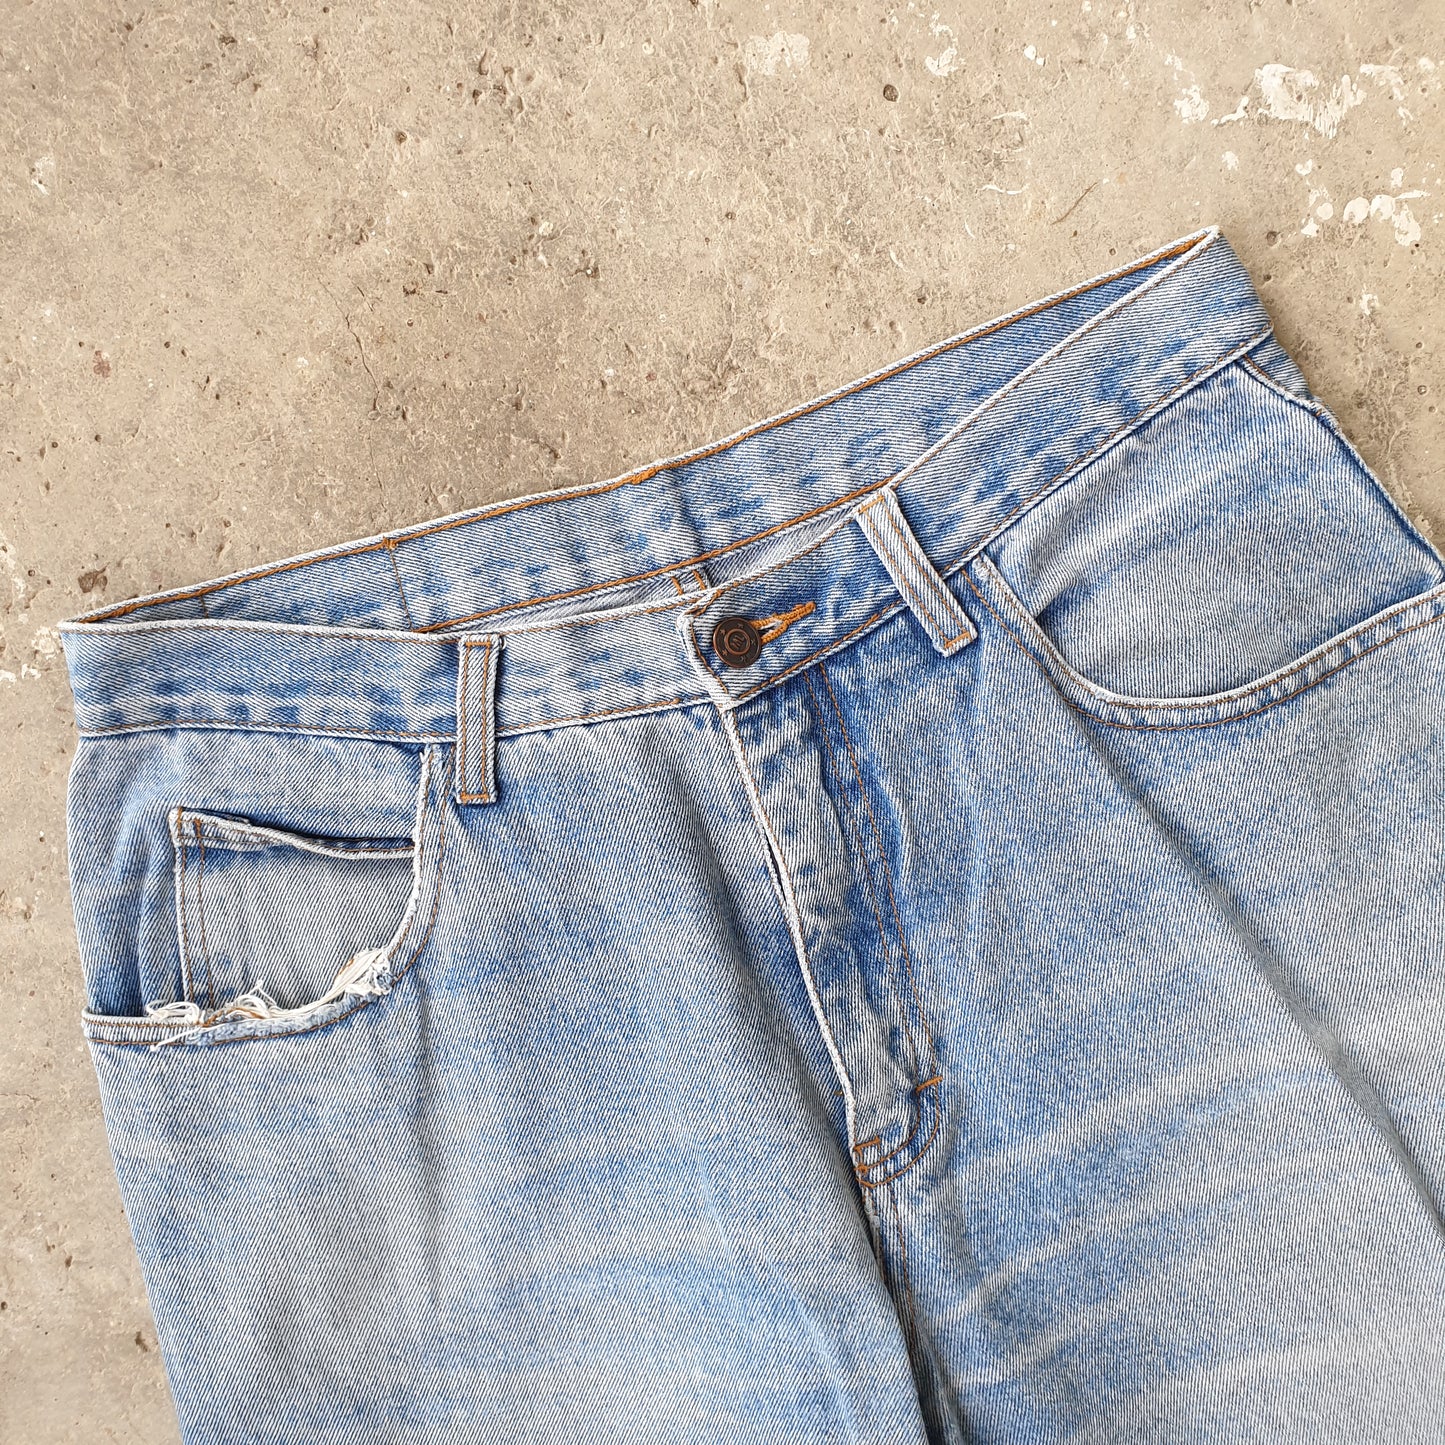 Vintage Custom Painted Jeans (30)